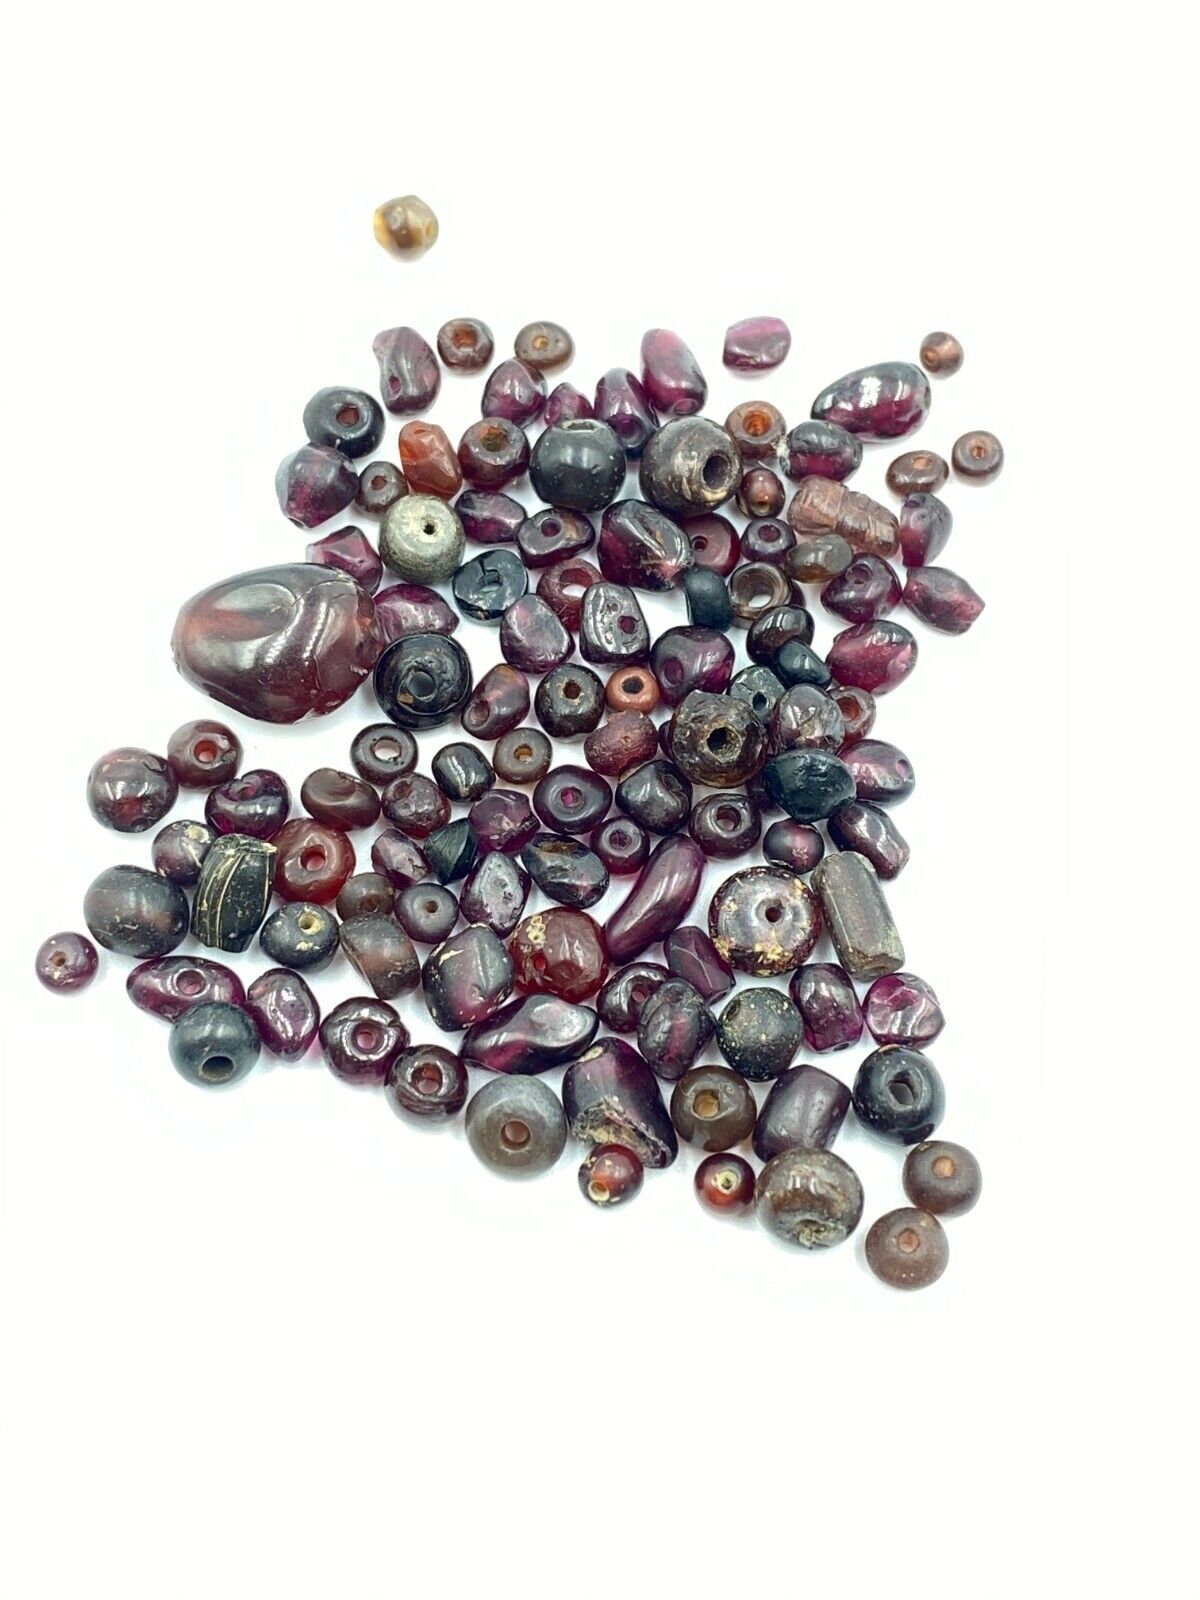 OLD BEADS Ancient Mauryan Romans Gems Jewelry Garnet Stone Beads Necklace